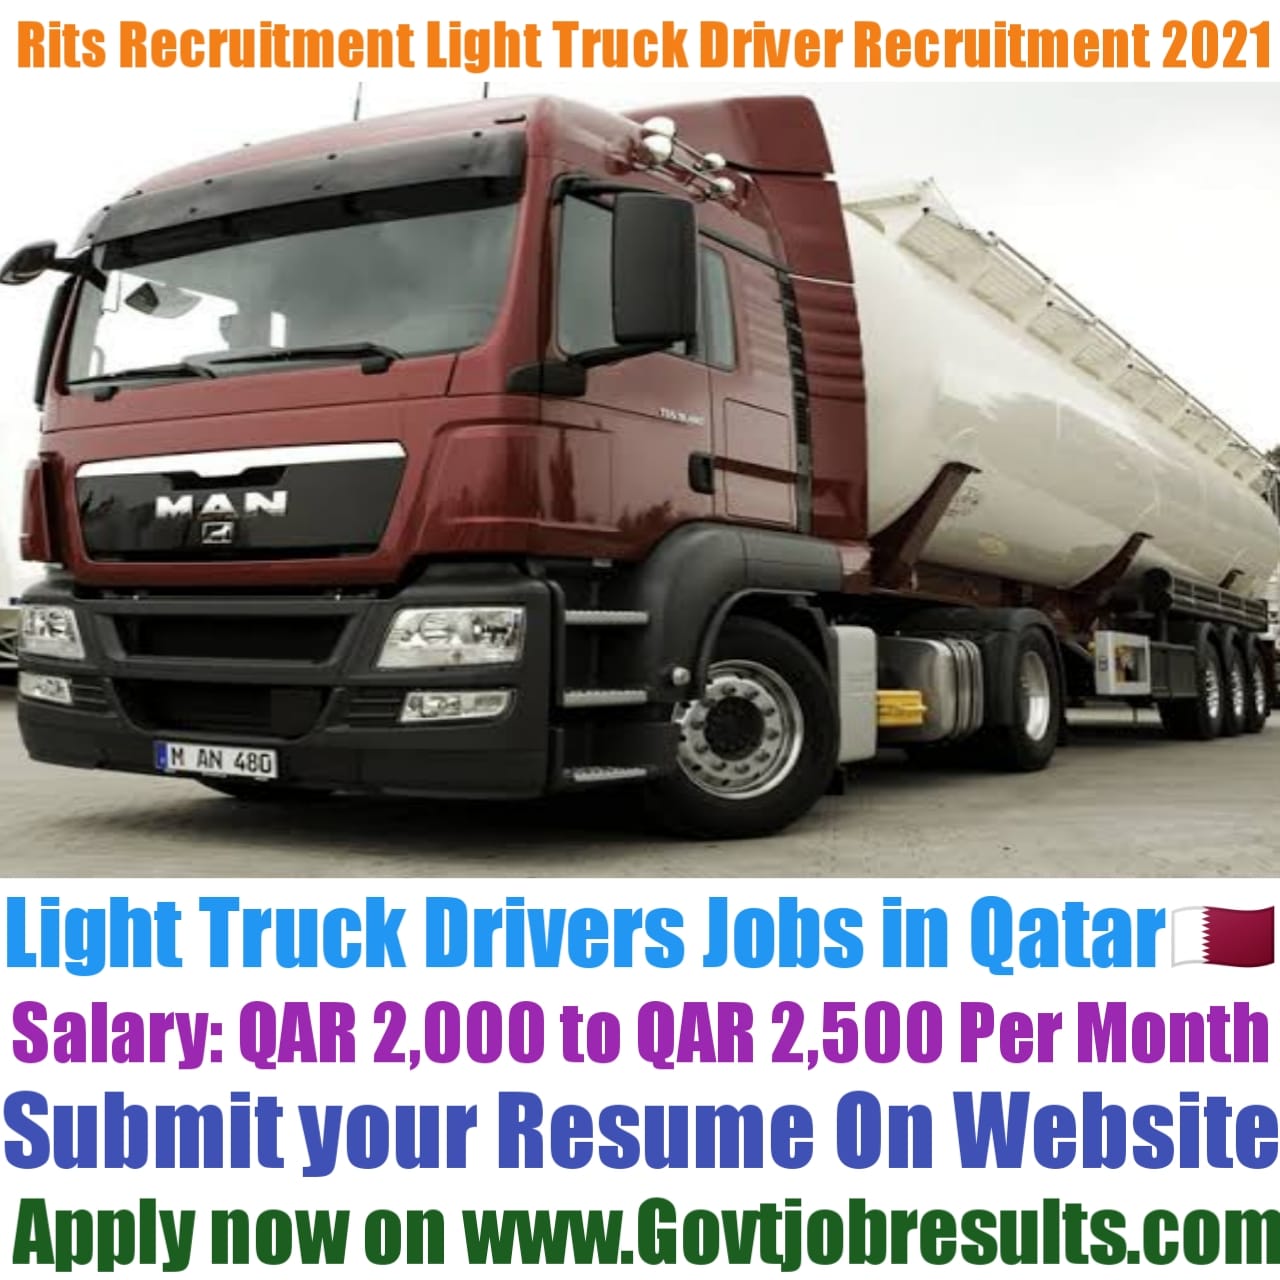 Rits Recruitment Light Truck Driver Recruitment 2021 22 Govtjobresults